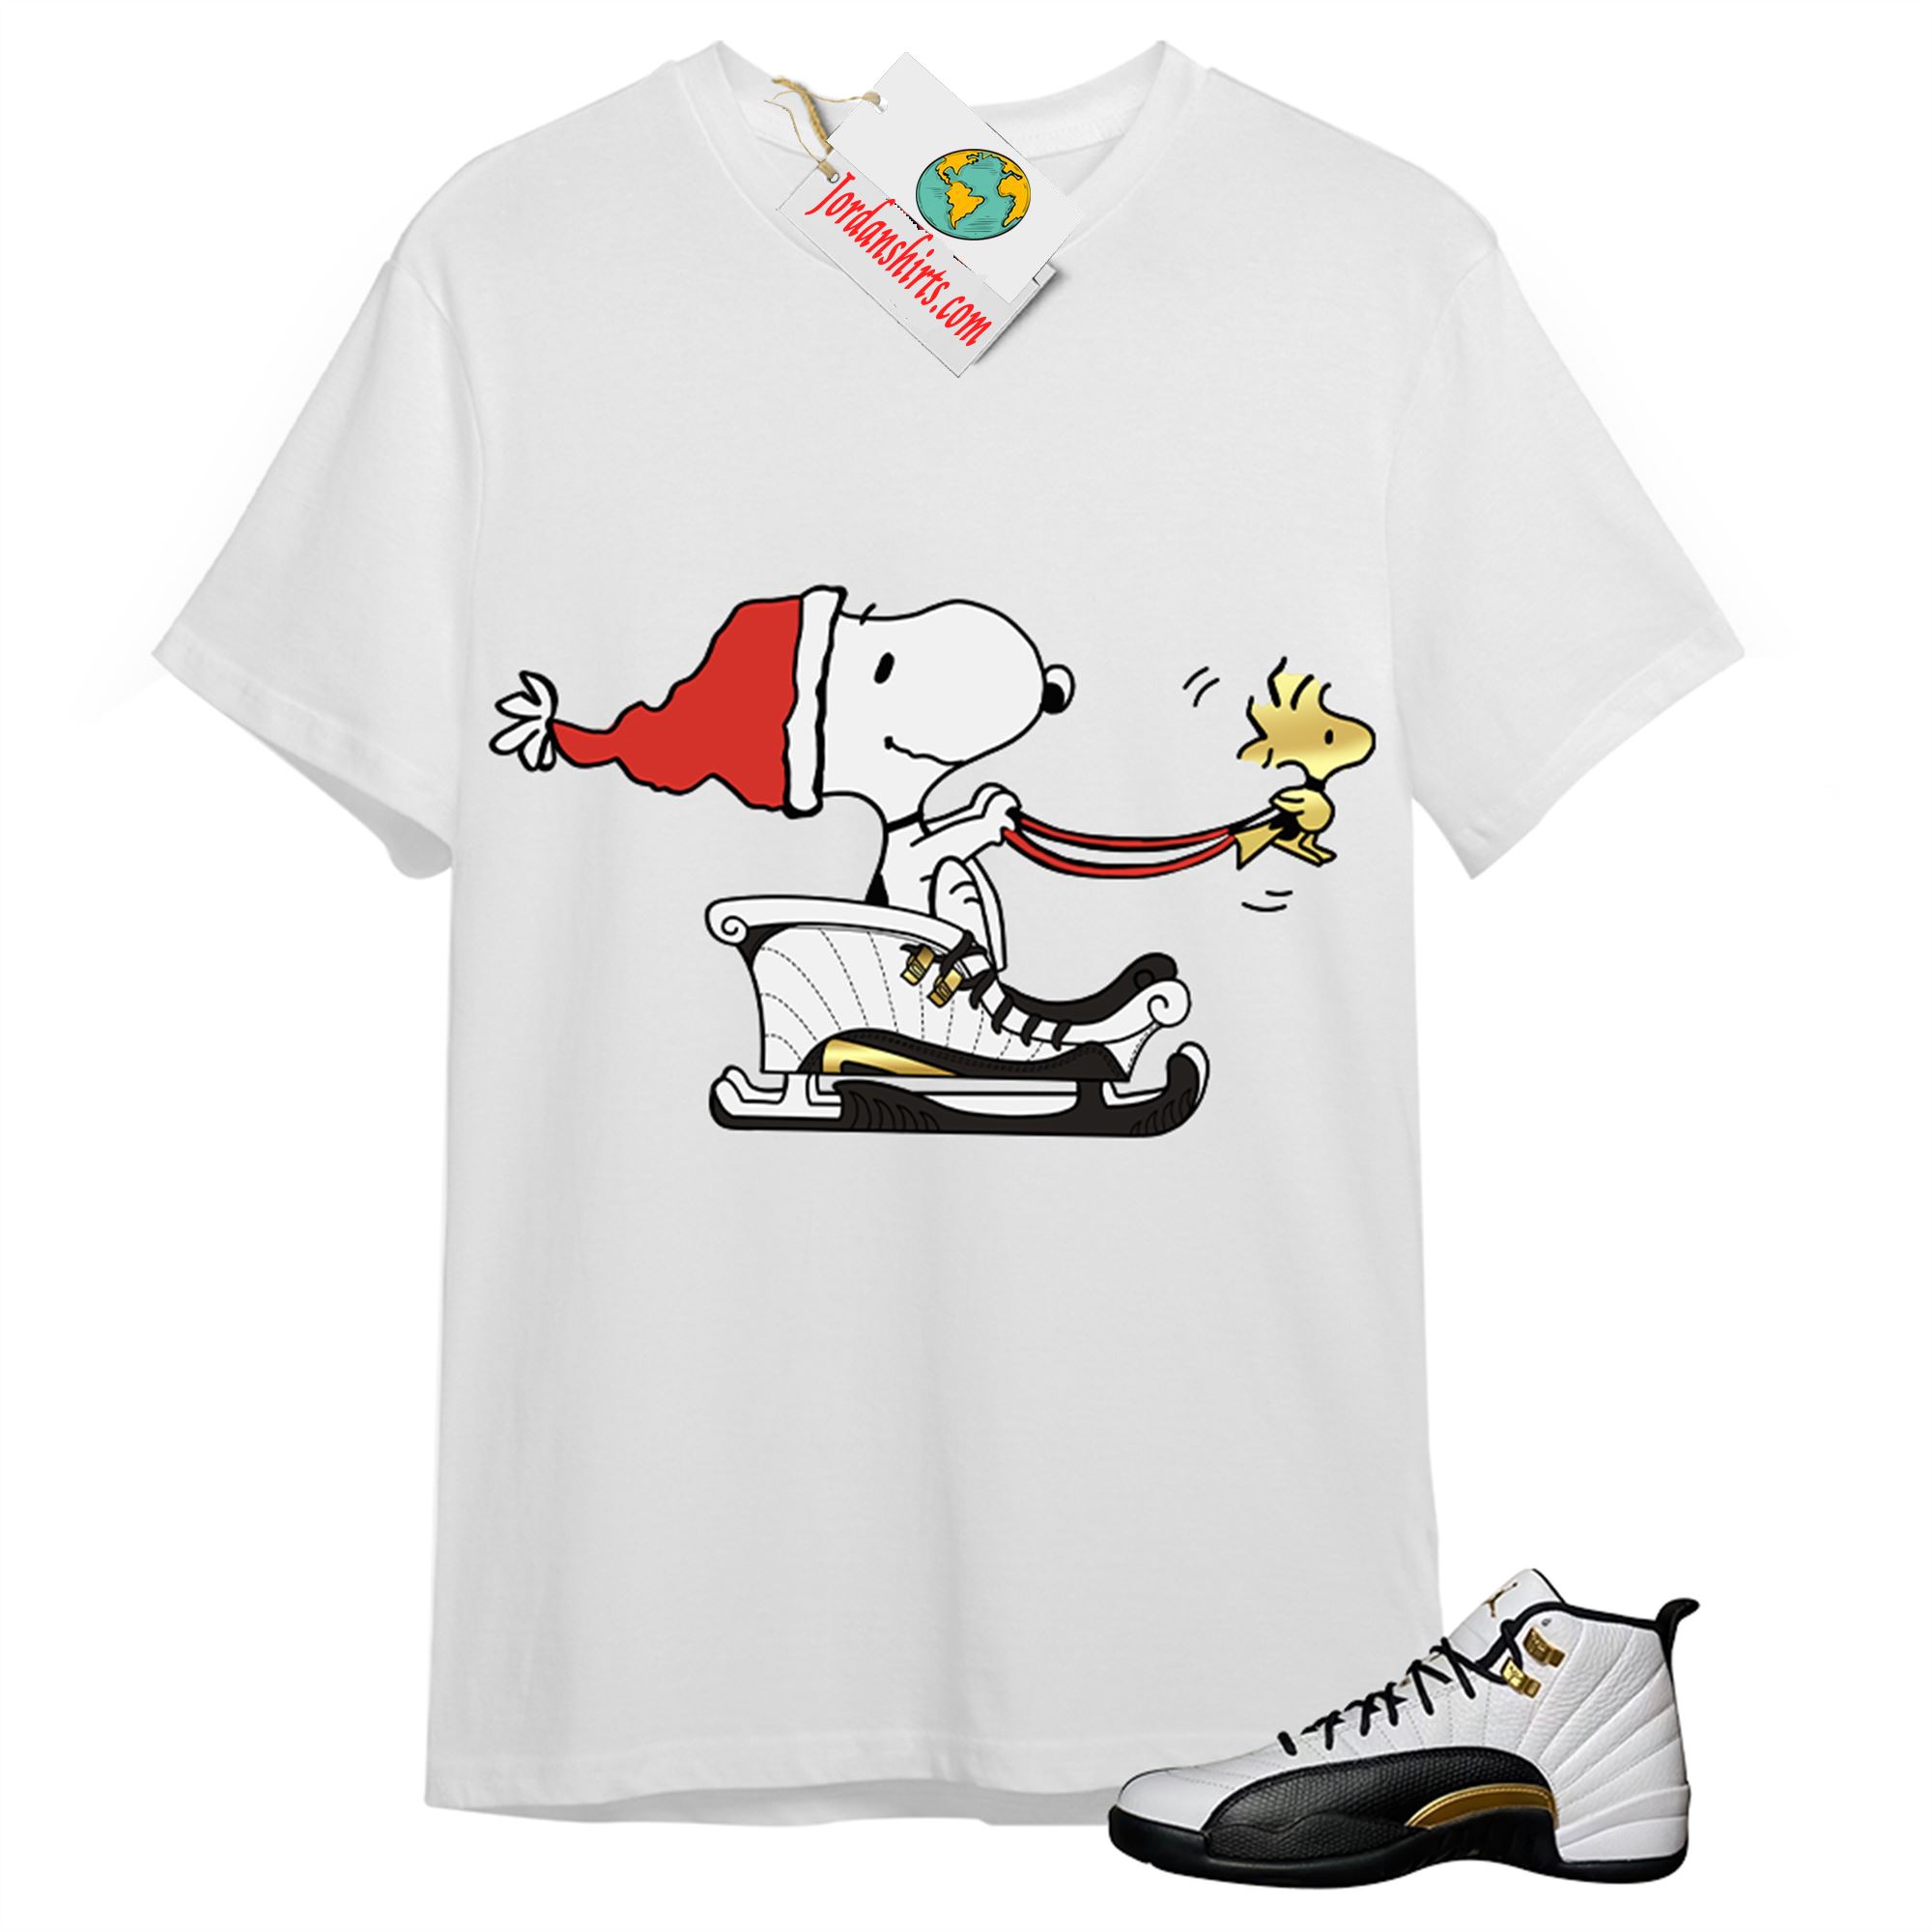 Jordan 12 Shirt, Snoopy Dog Christmas White T-shirt Air Jordan 12 Royalty 12s Plus Size Up To 5xl